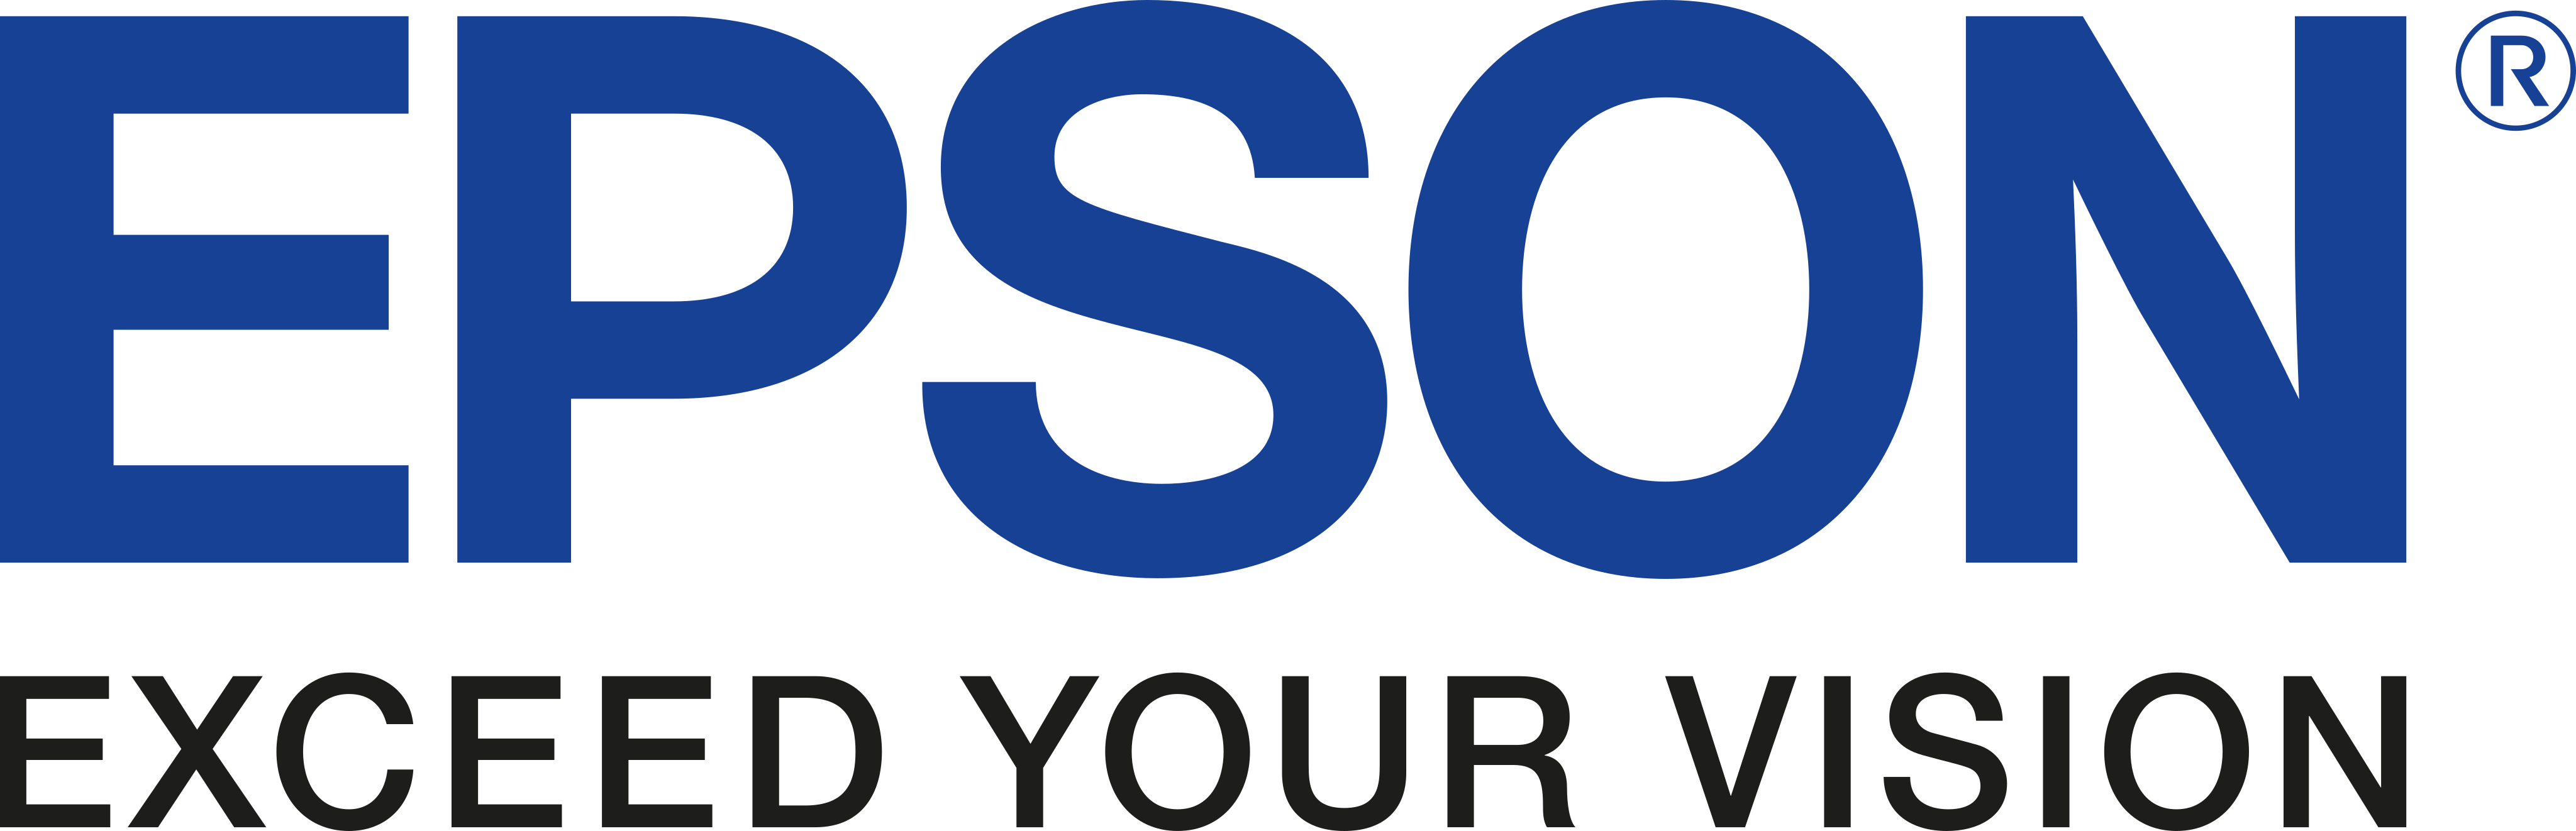 Epson Logo and Vector